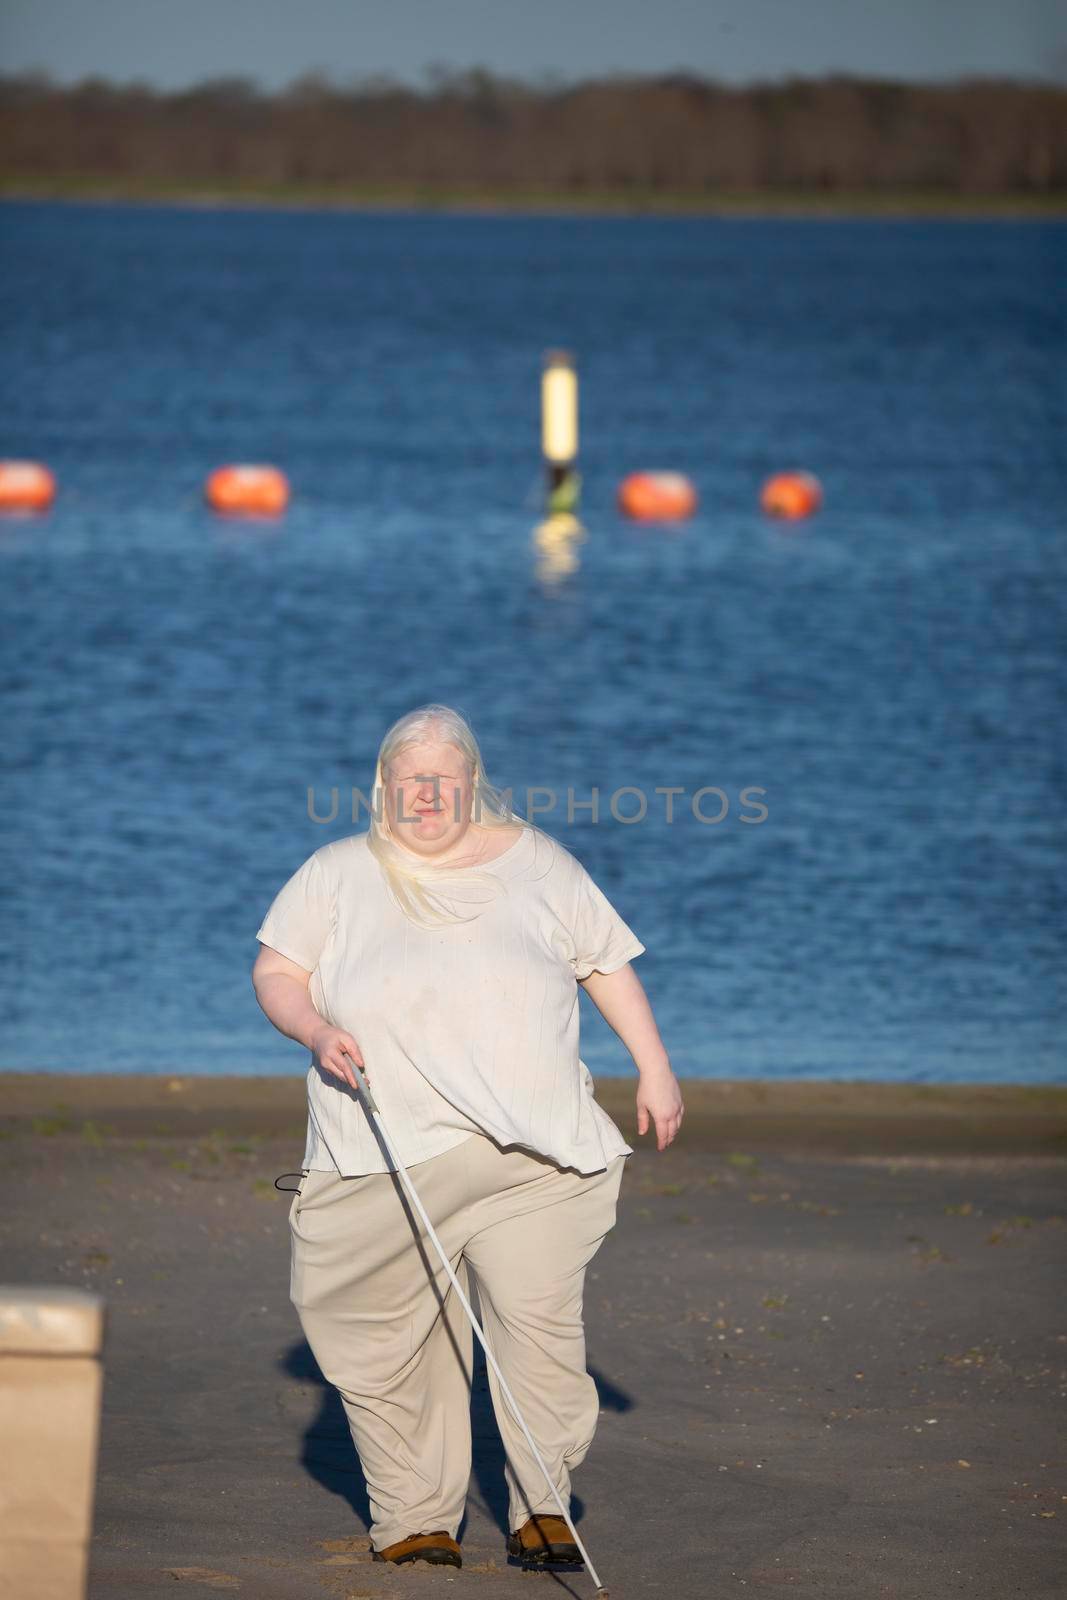 Blind Woman on a Beach by tornado98